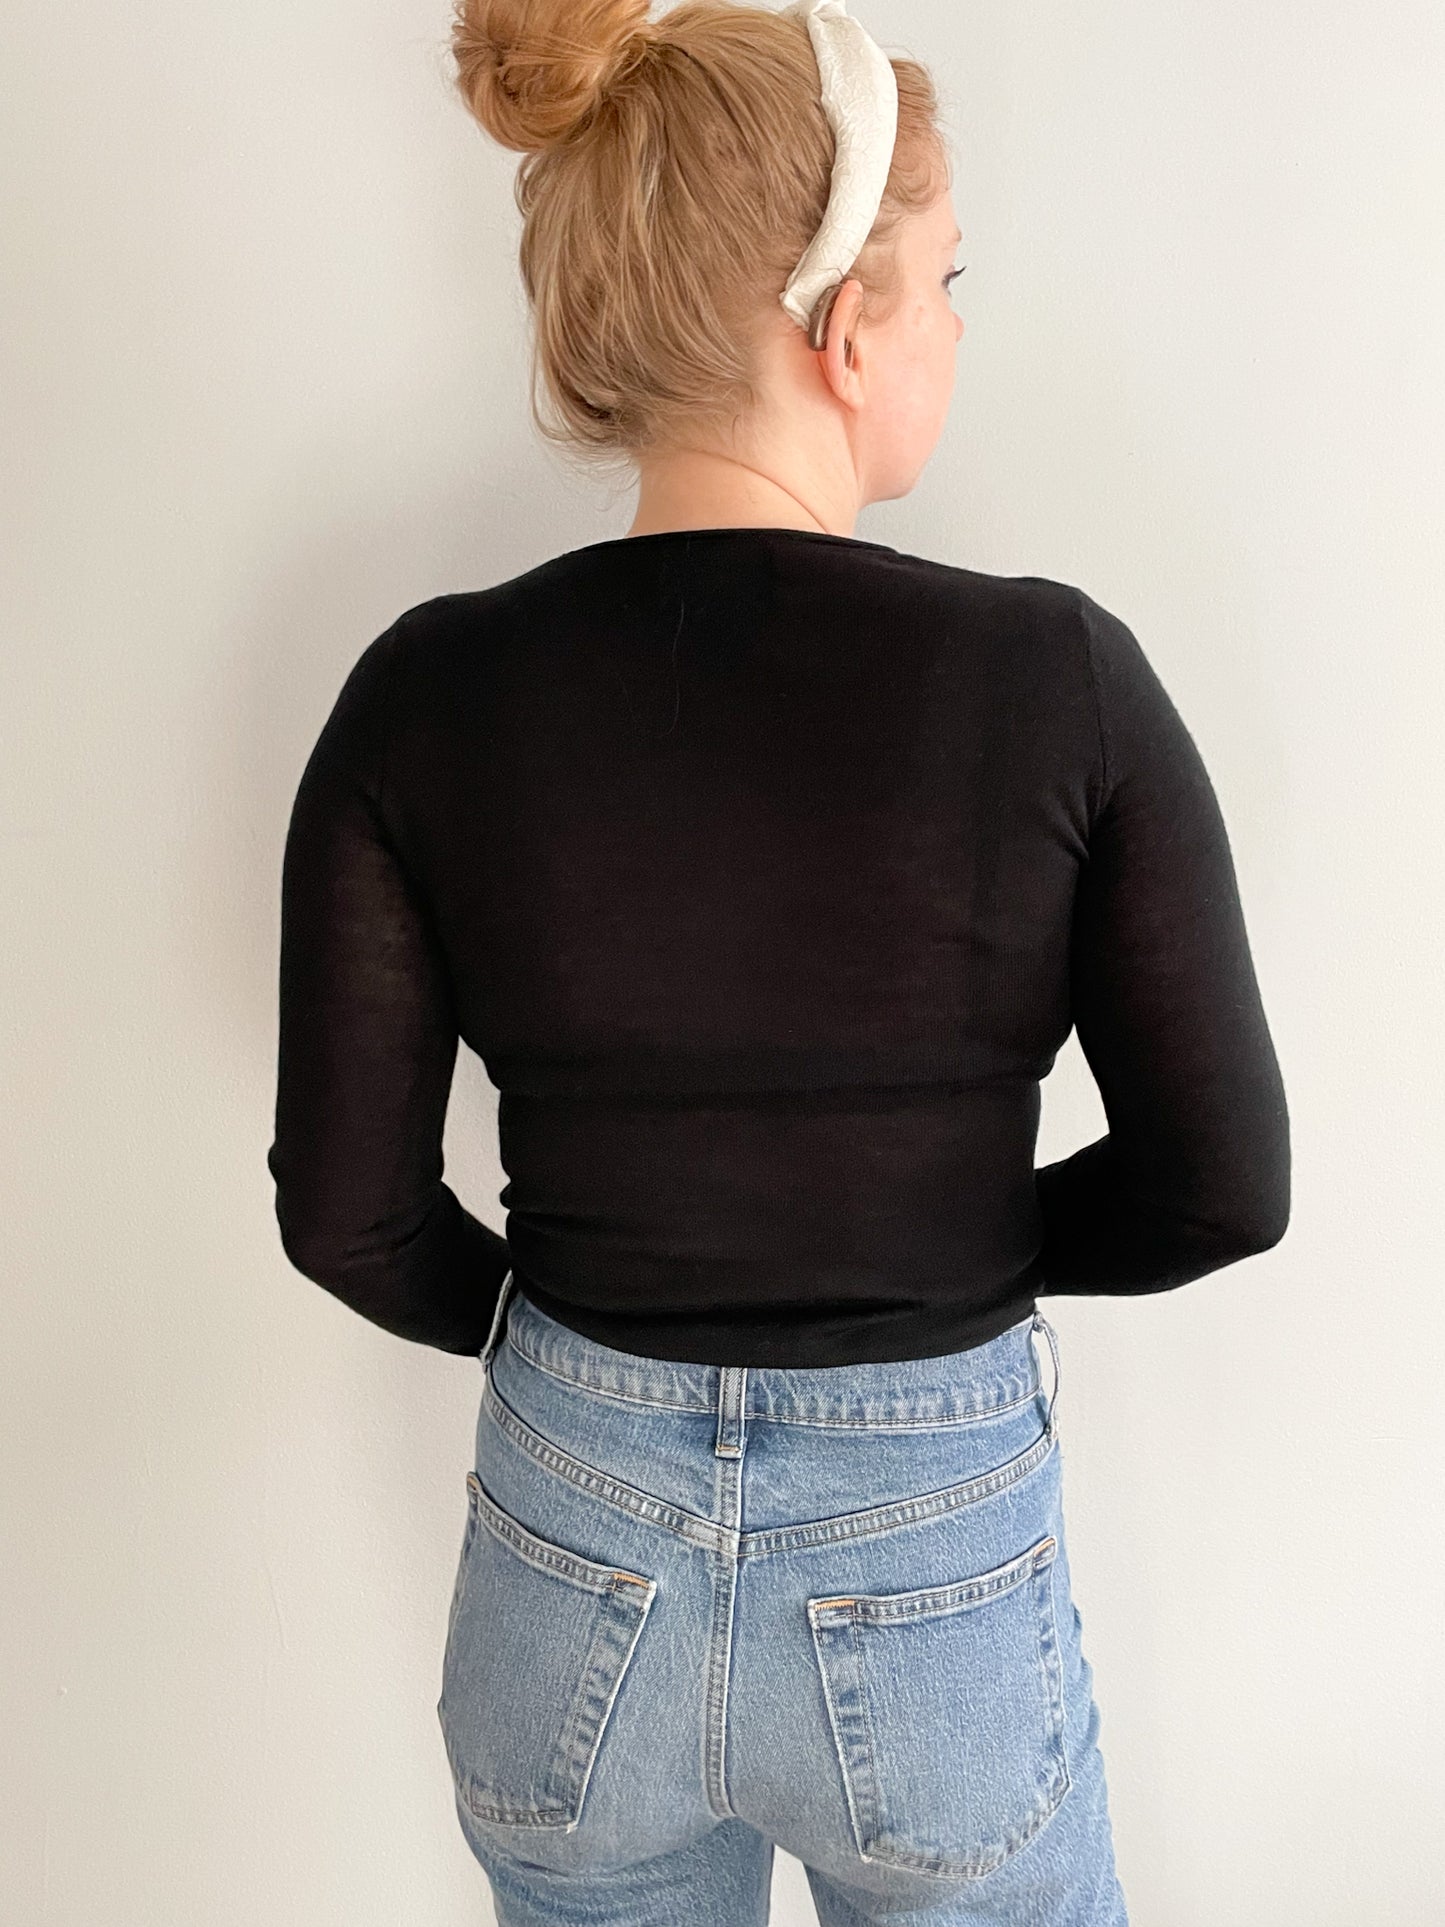 Cynthia Rowley Extra Fine Merino Wool Black Pullover Sweater - XS/S